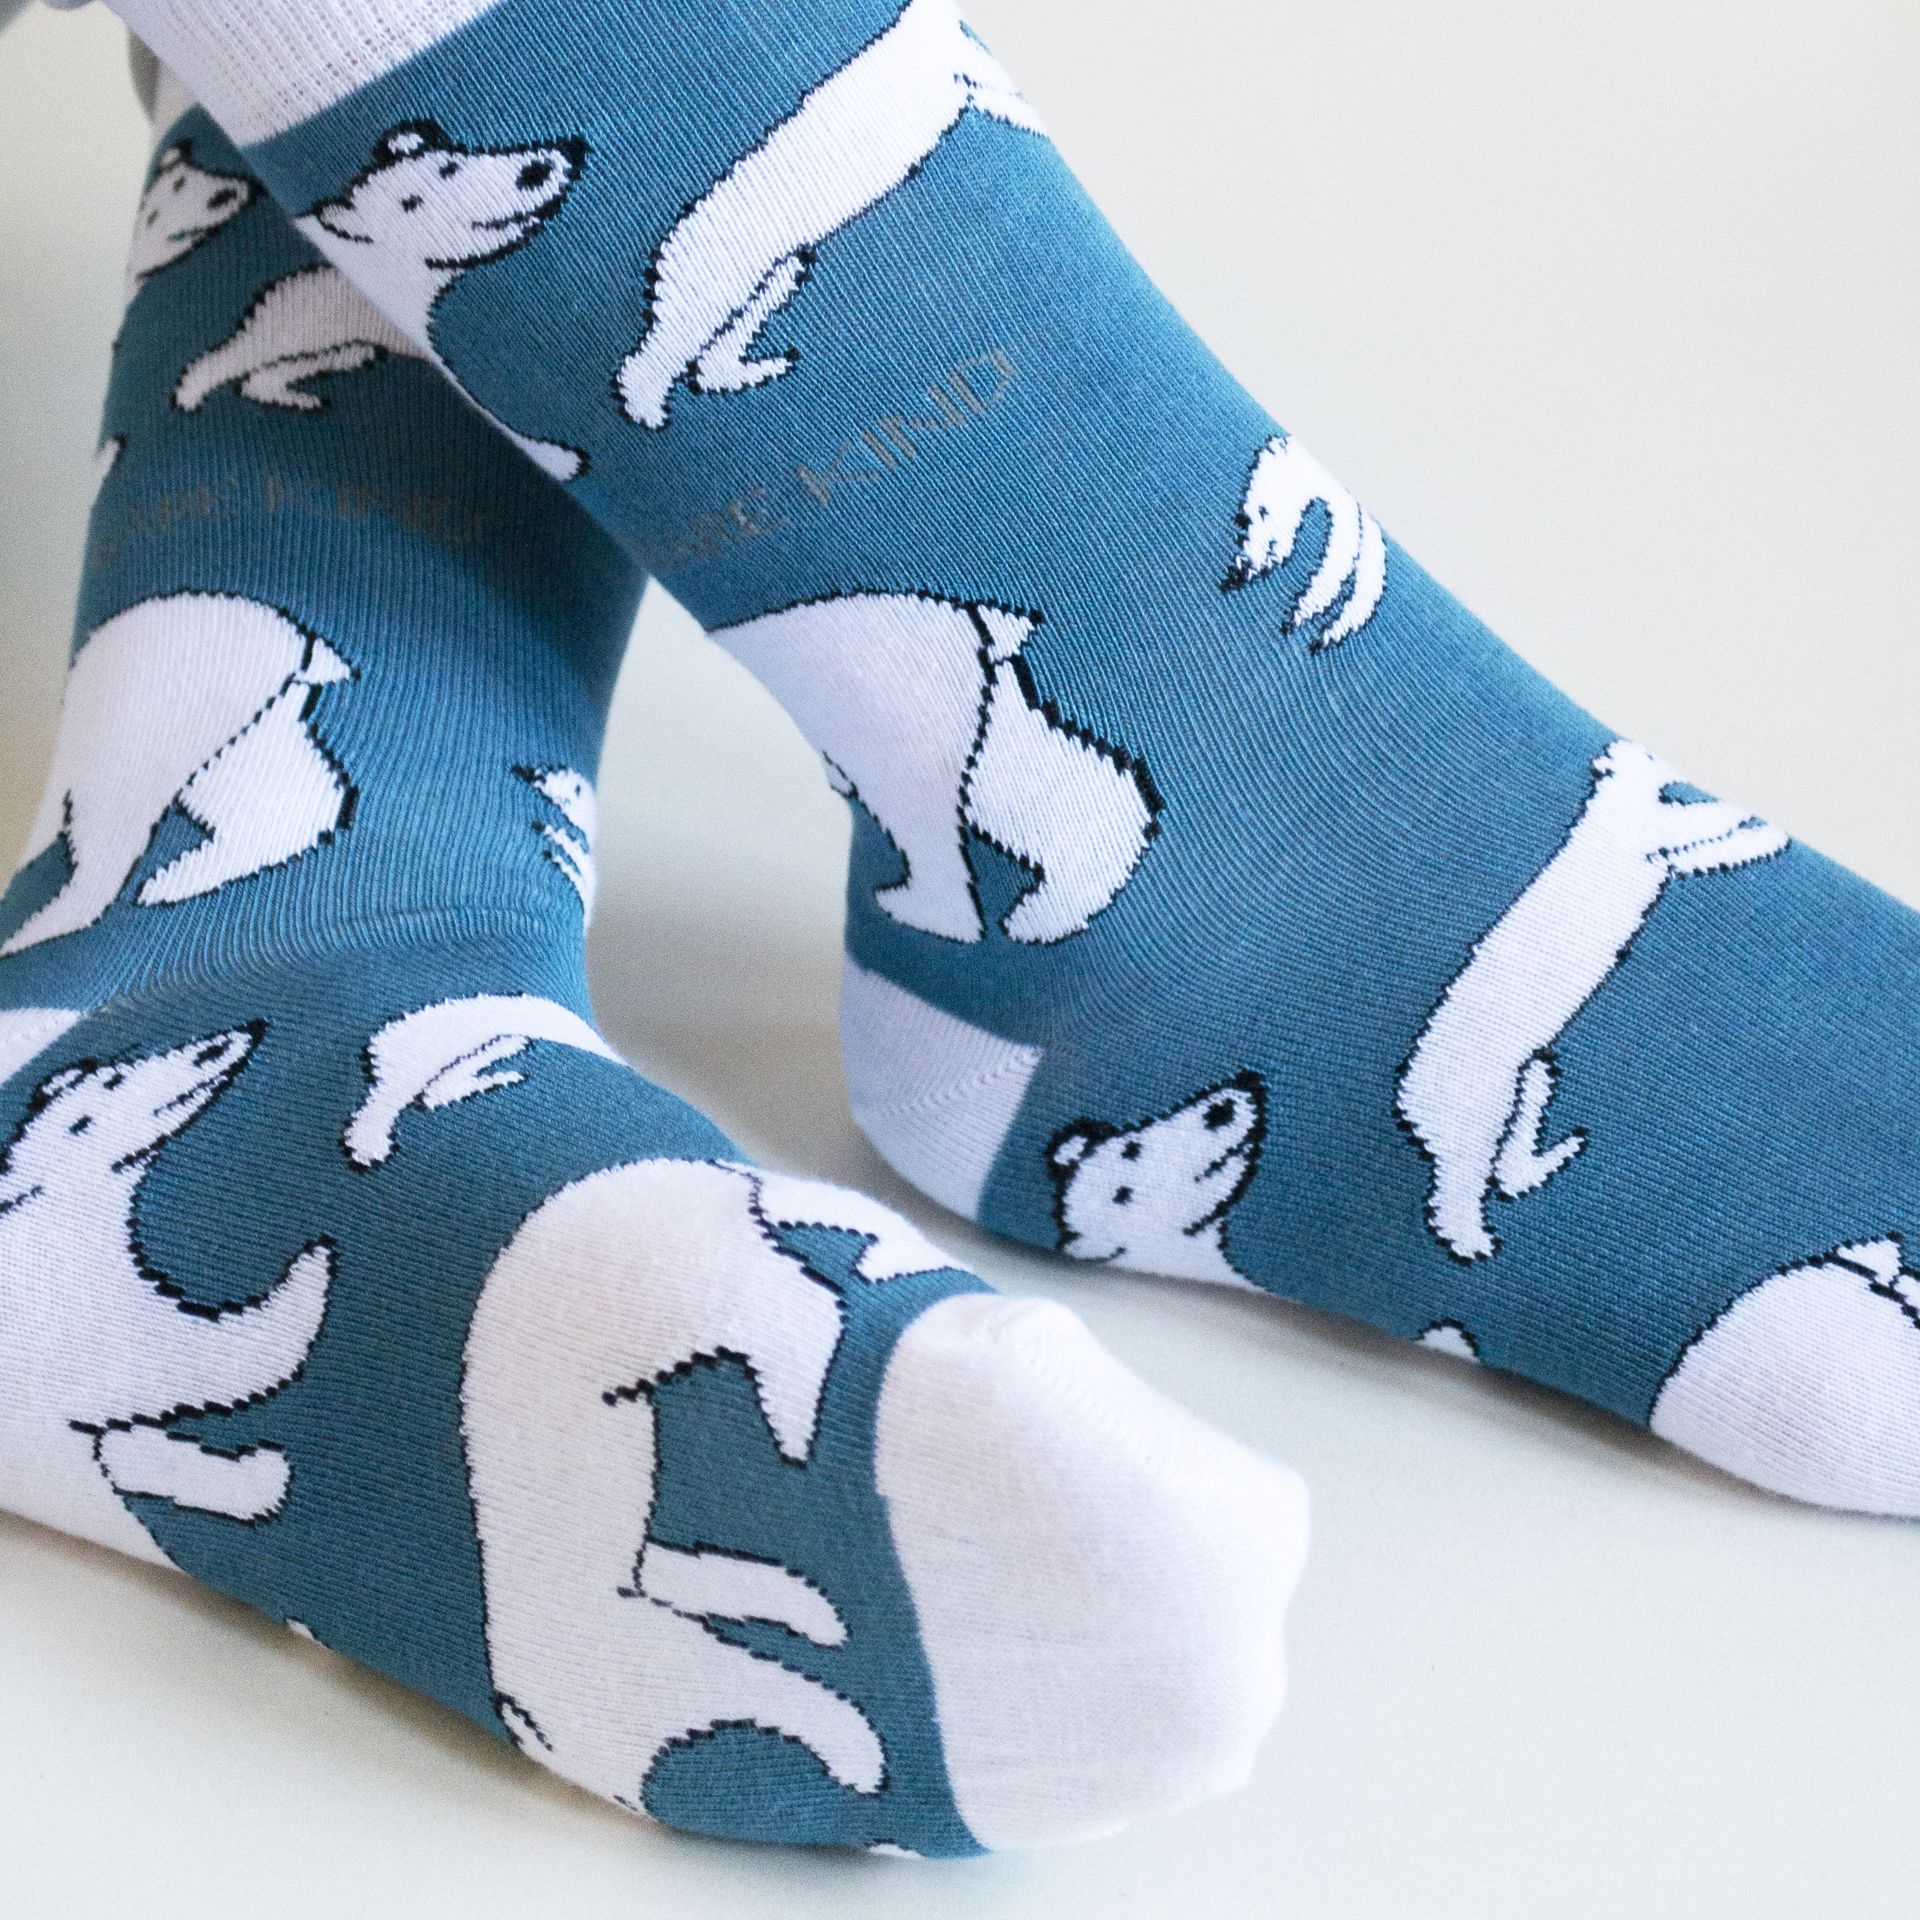 Save The Polar Bears Bamboo Socks